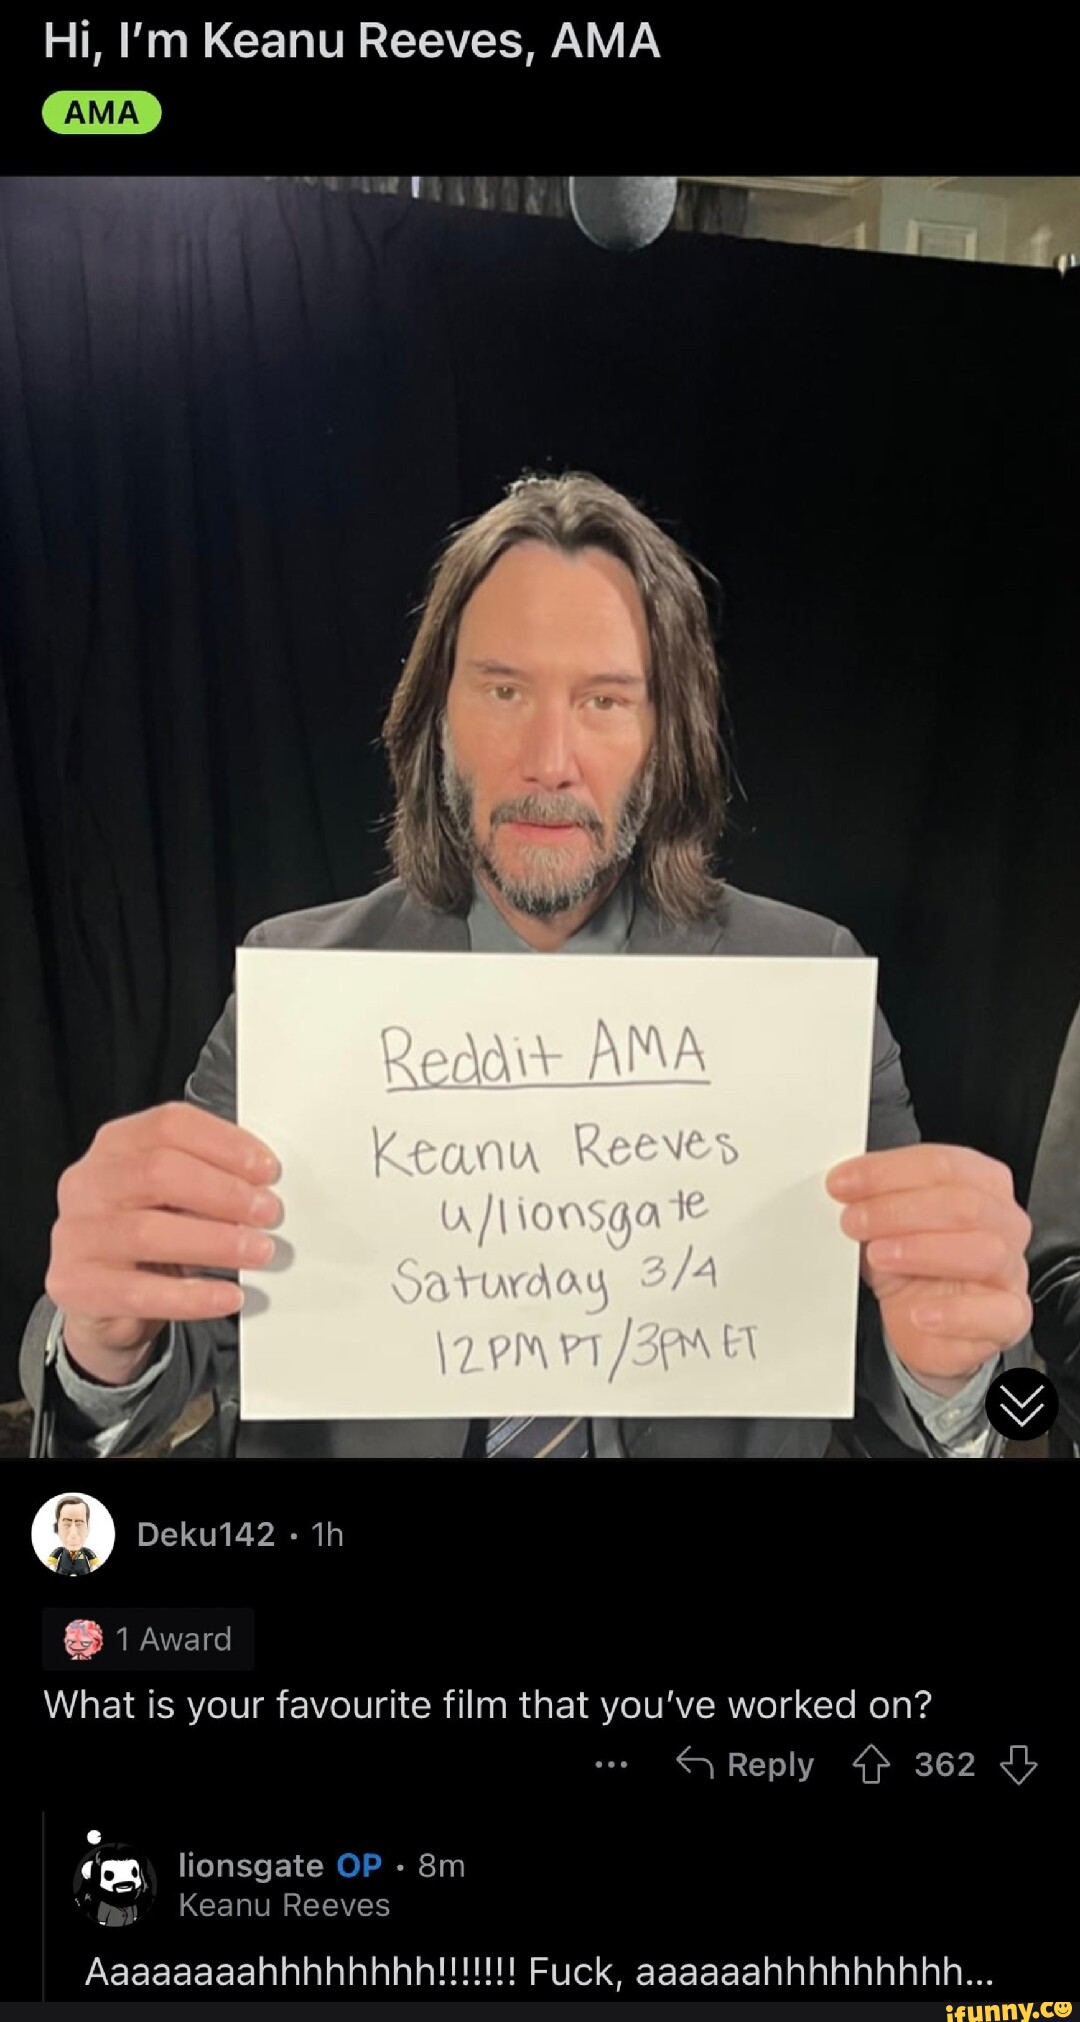 Hi, I'm Keanu Reeves, AMA : r/movies